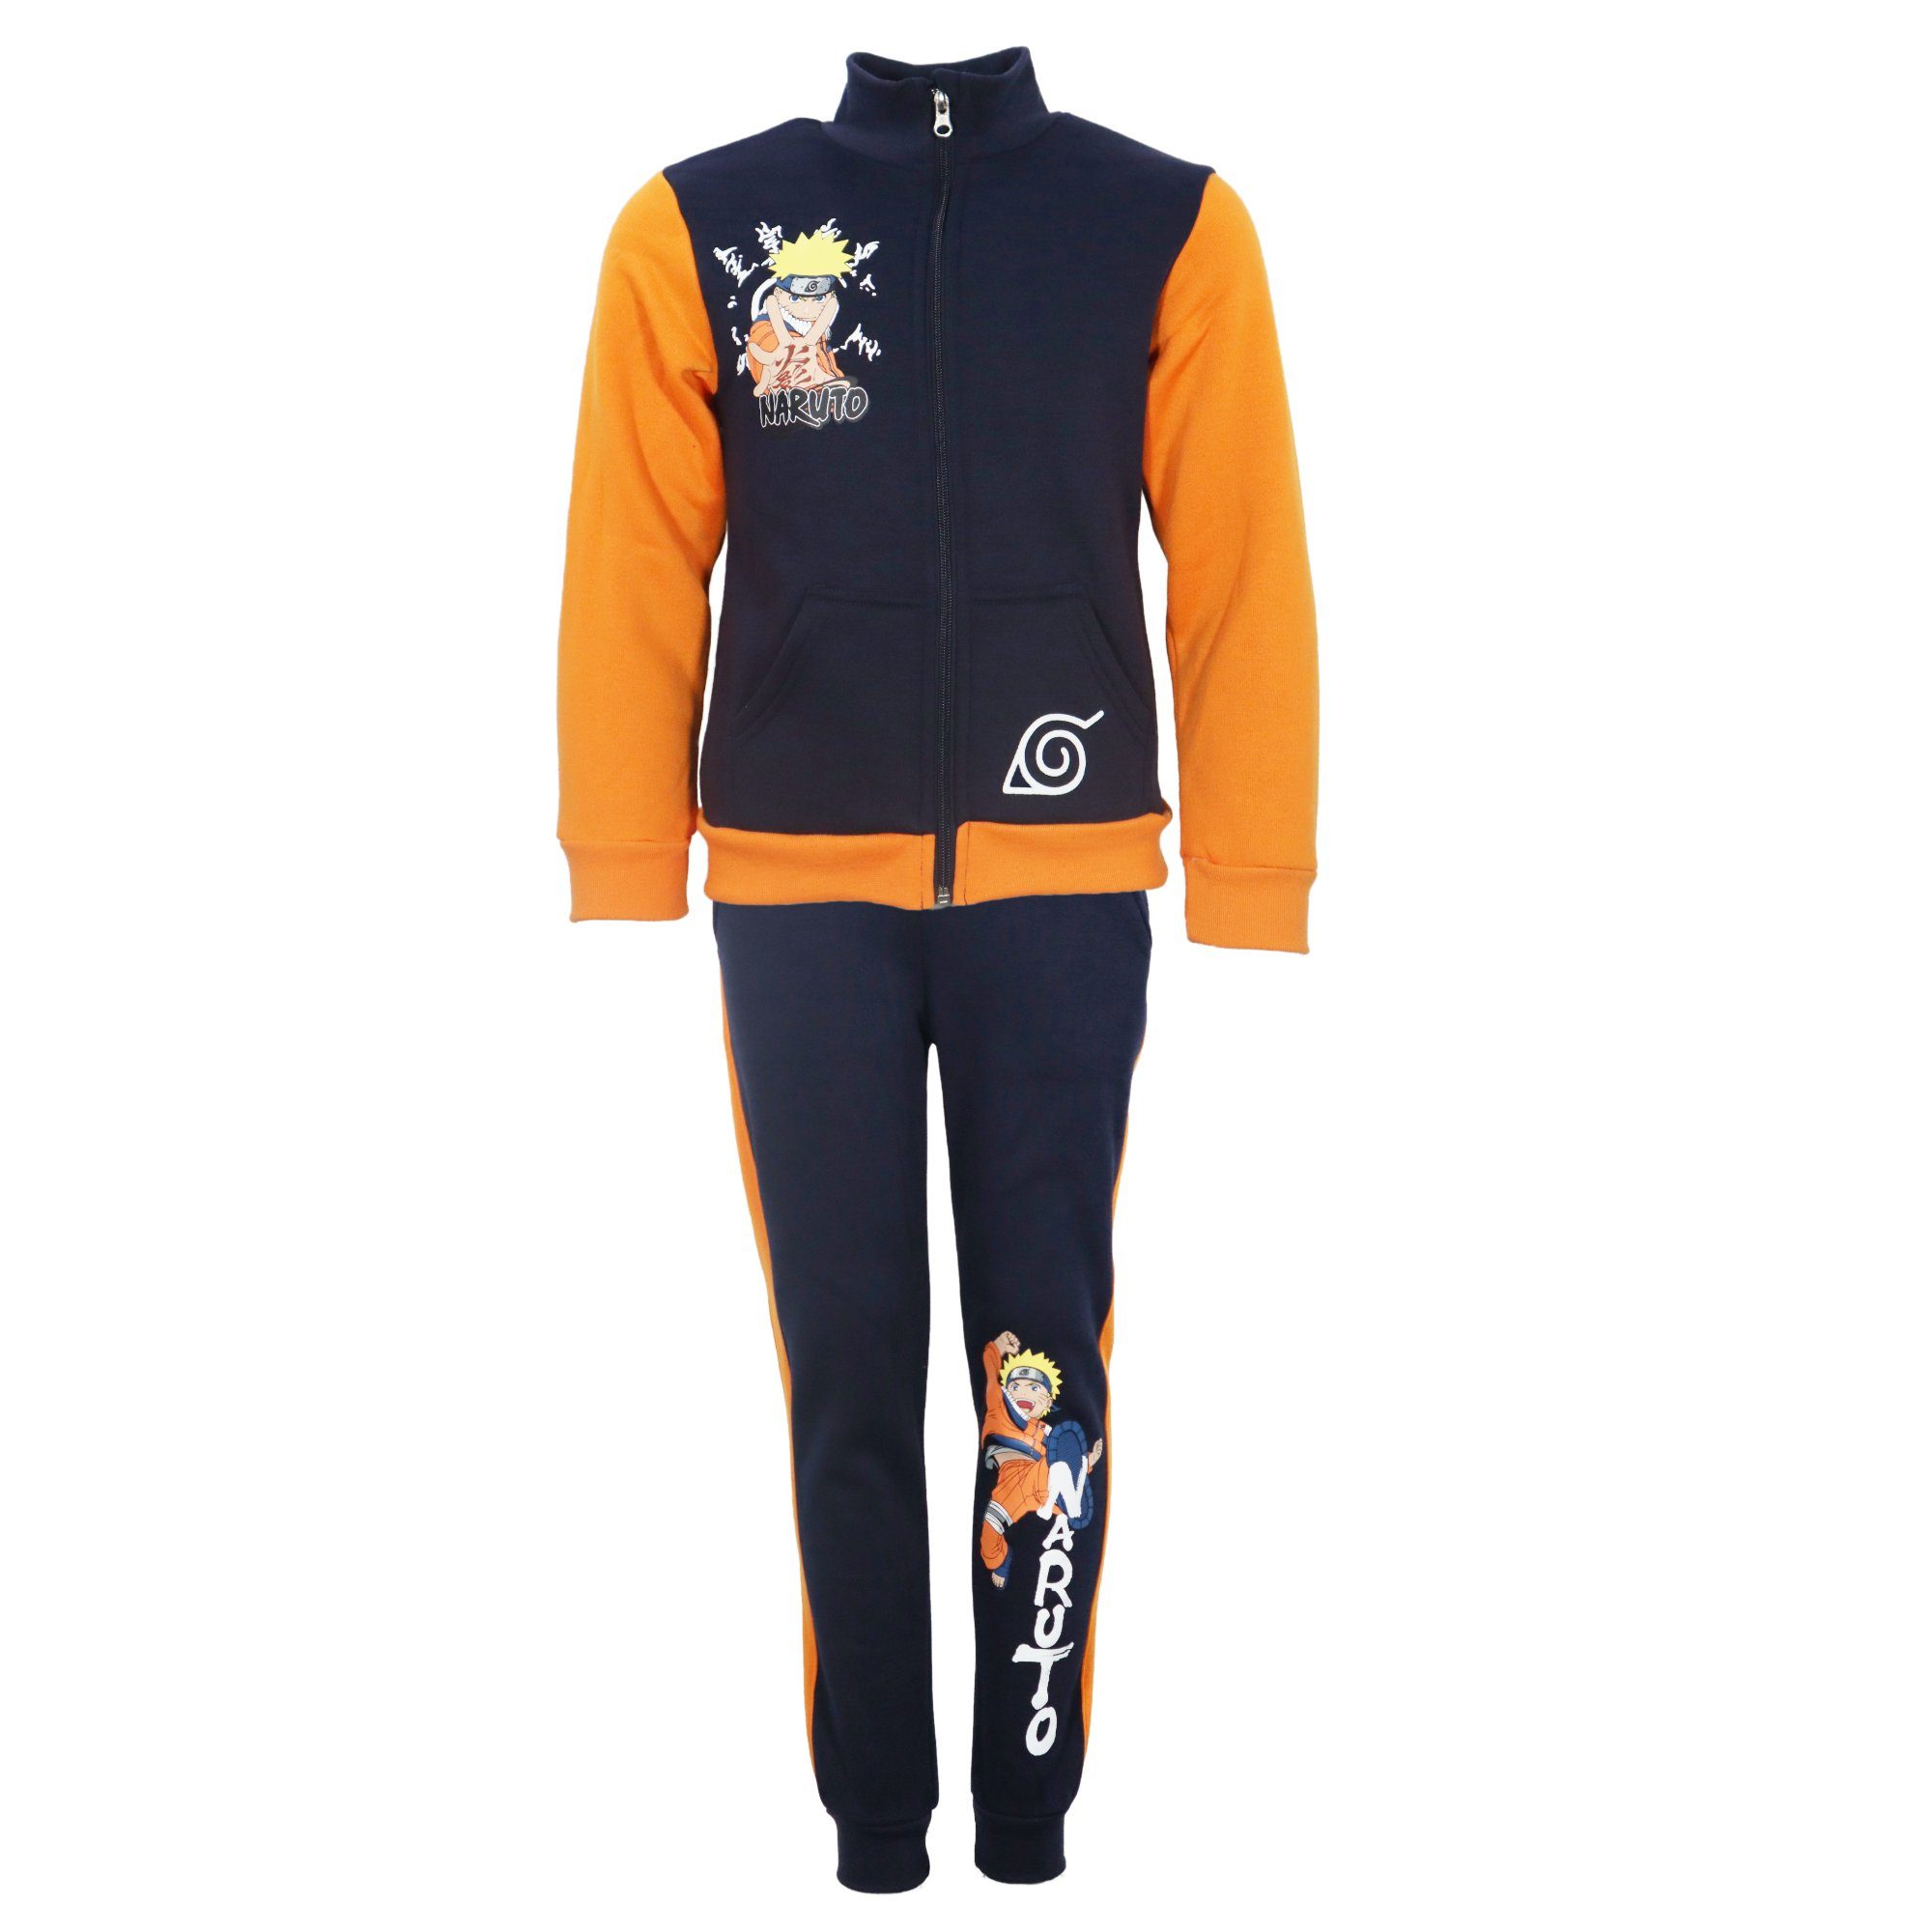 Naruto Jogginganzug Naruto Shippuden Joggingset Sporthose Hose Sweater Jacke, Gr. 98 bis 140 Blau